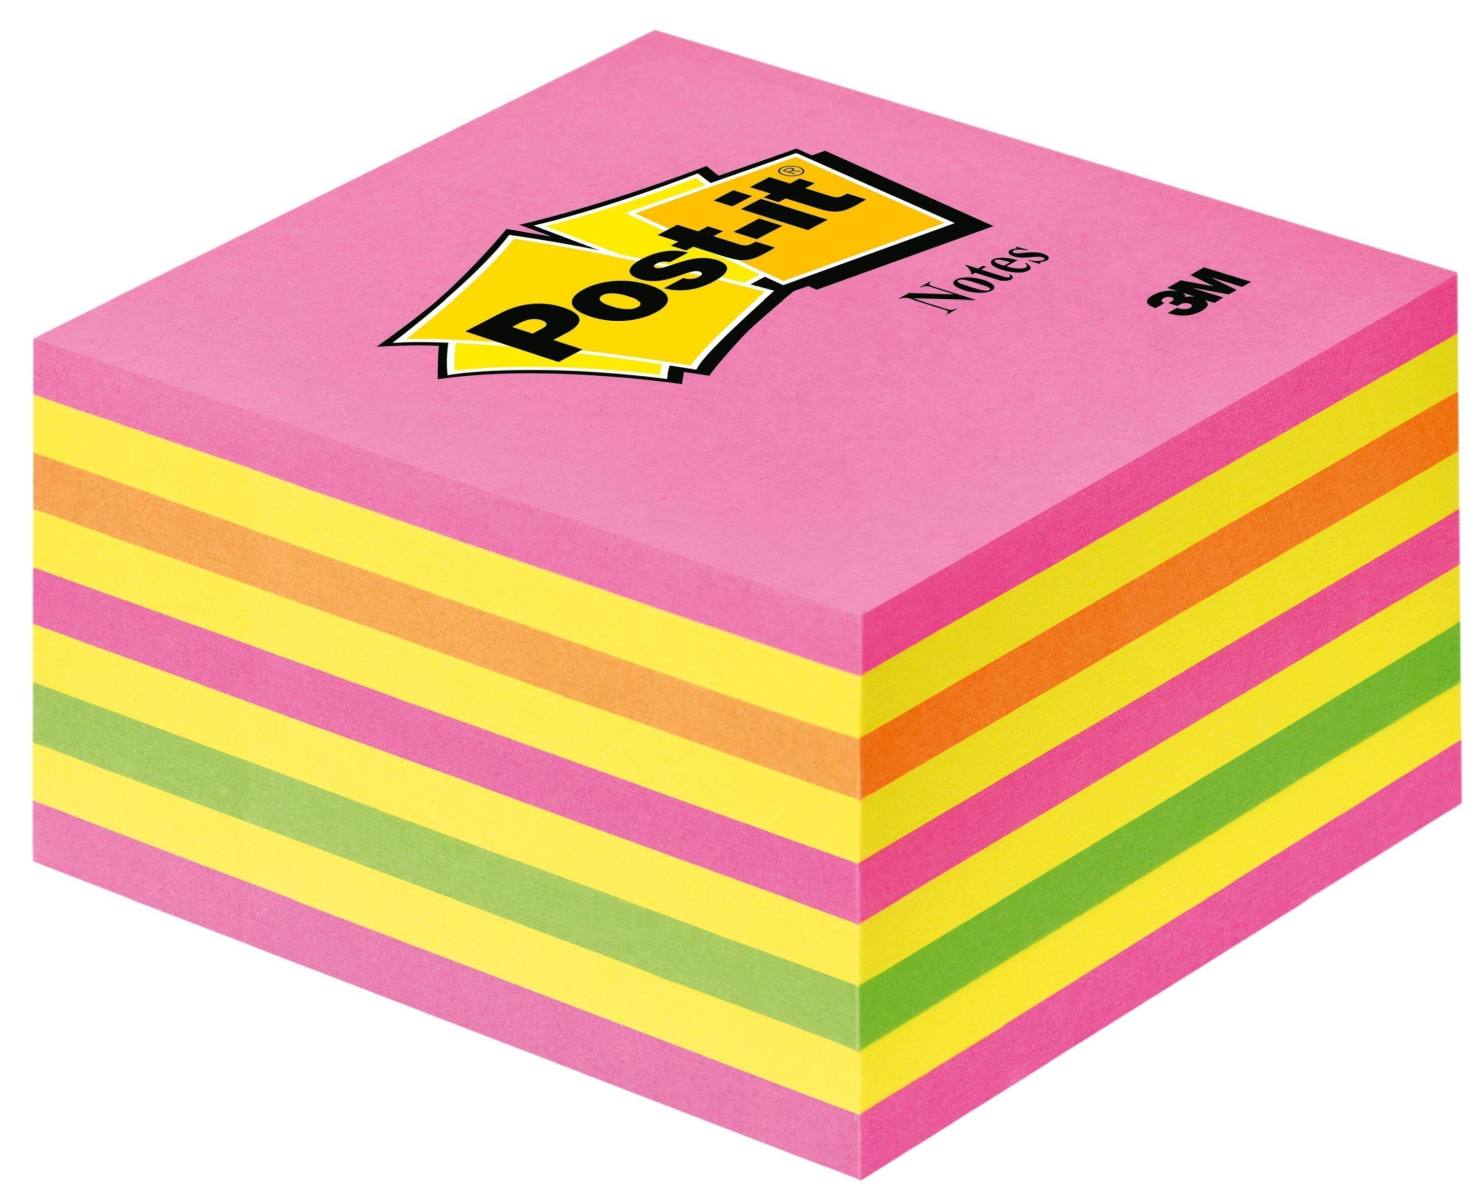 3M Post-it Würfel 2028NP, 76 mm x 76 mm, gelb, neongrün, neonpink, rosa, 1 Würfel à 450 Blatt, Pack = 12Stück